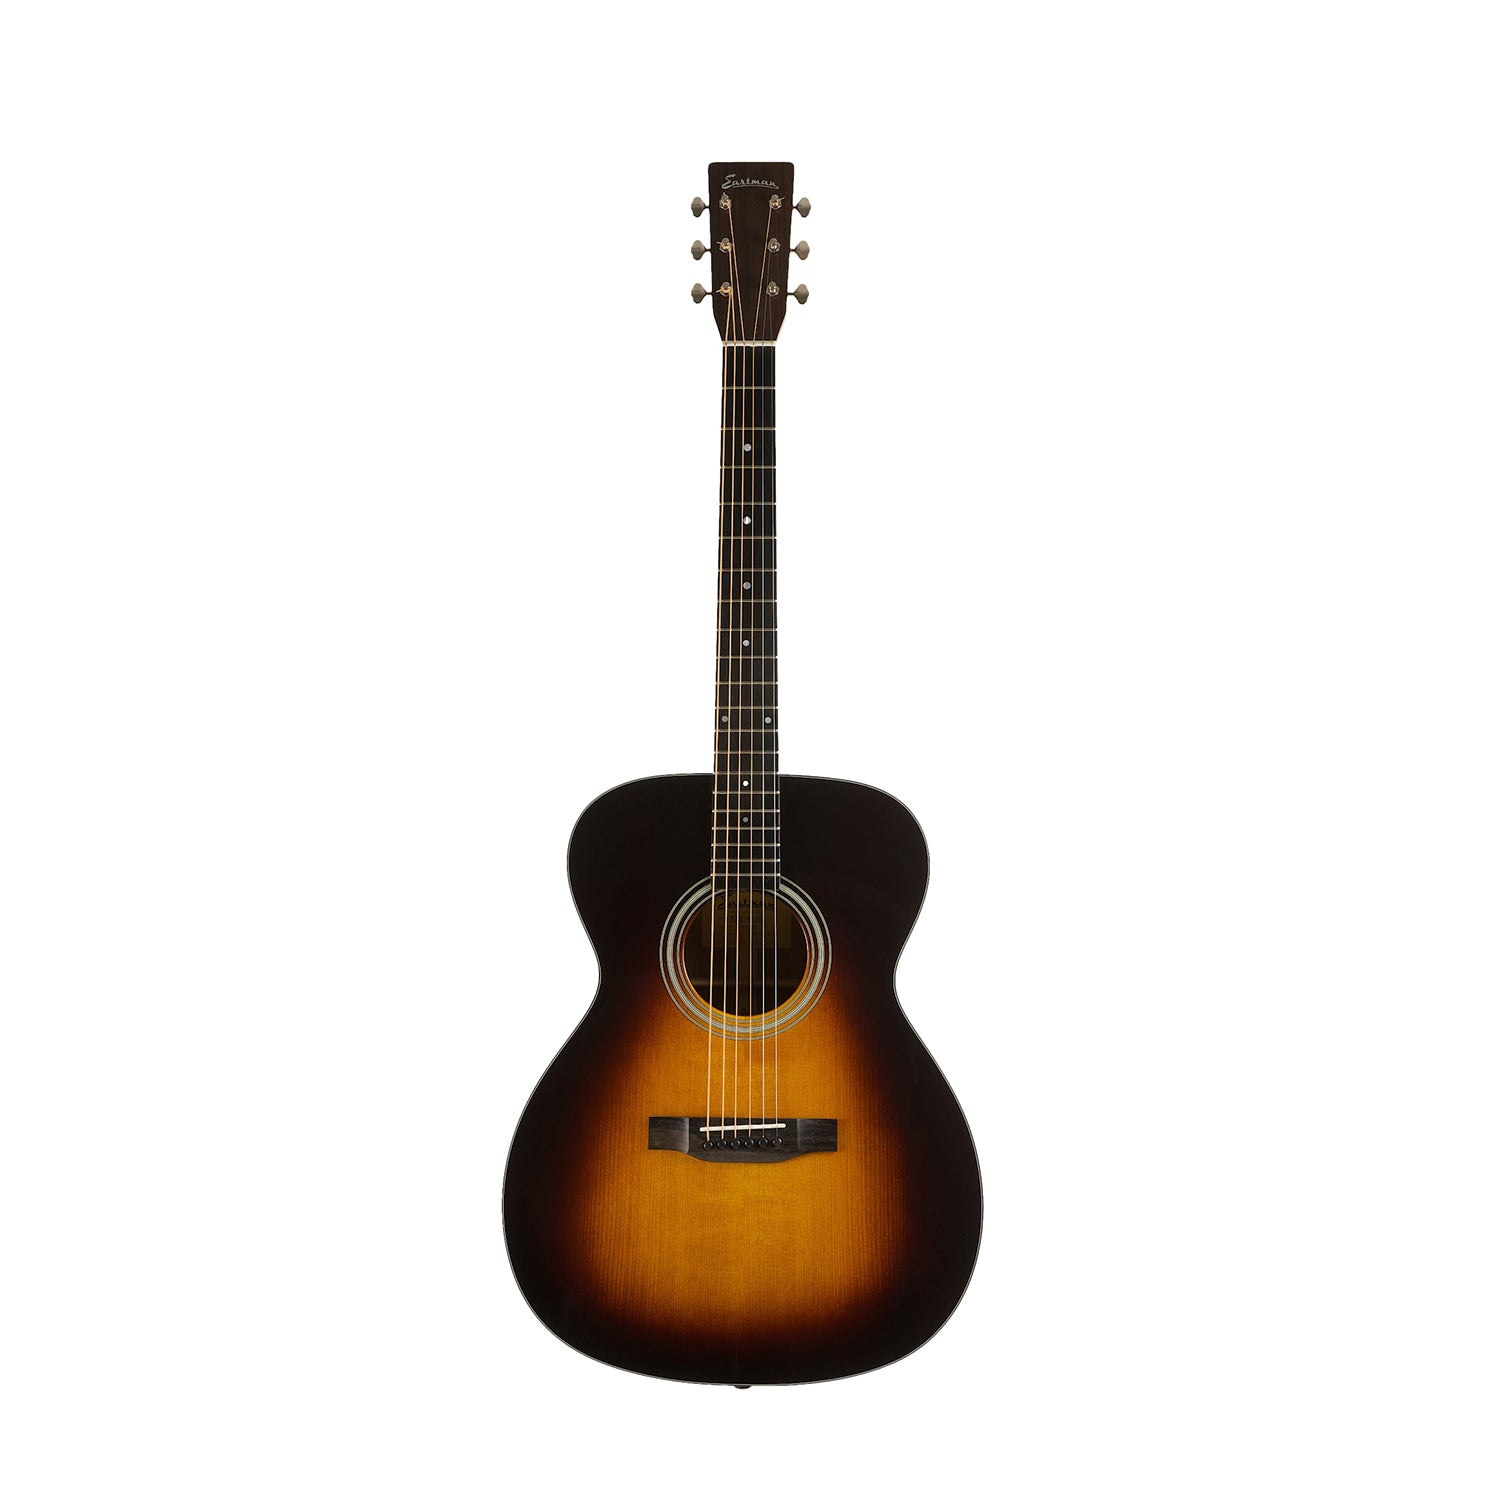 Eastman E10 OM-SB Orchestra Model Acoustic Sunburst Guitar Adirondak/Mahogany